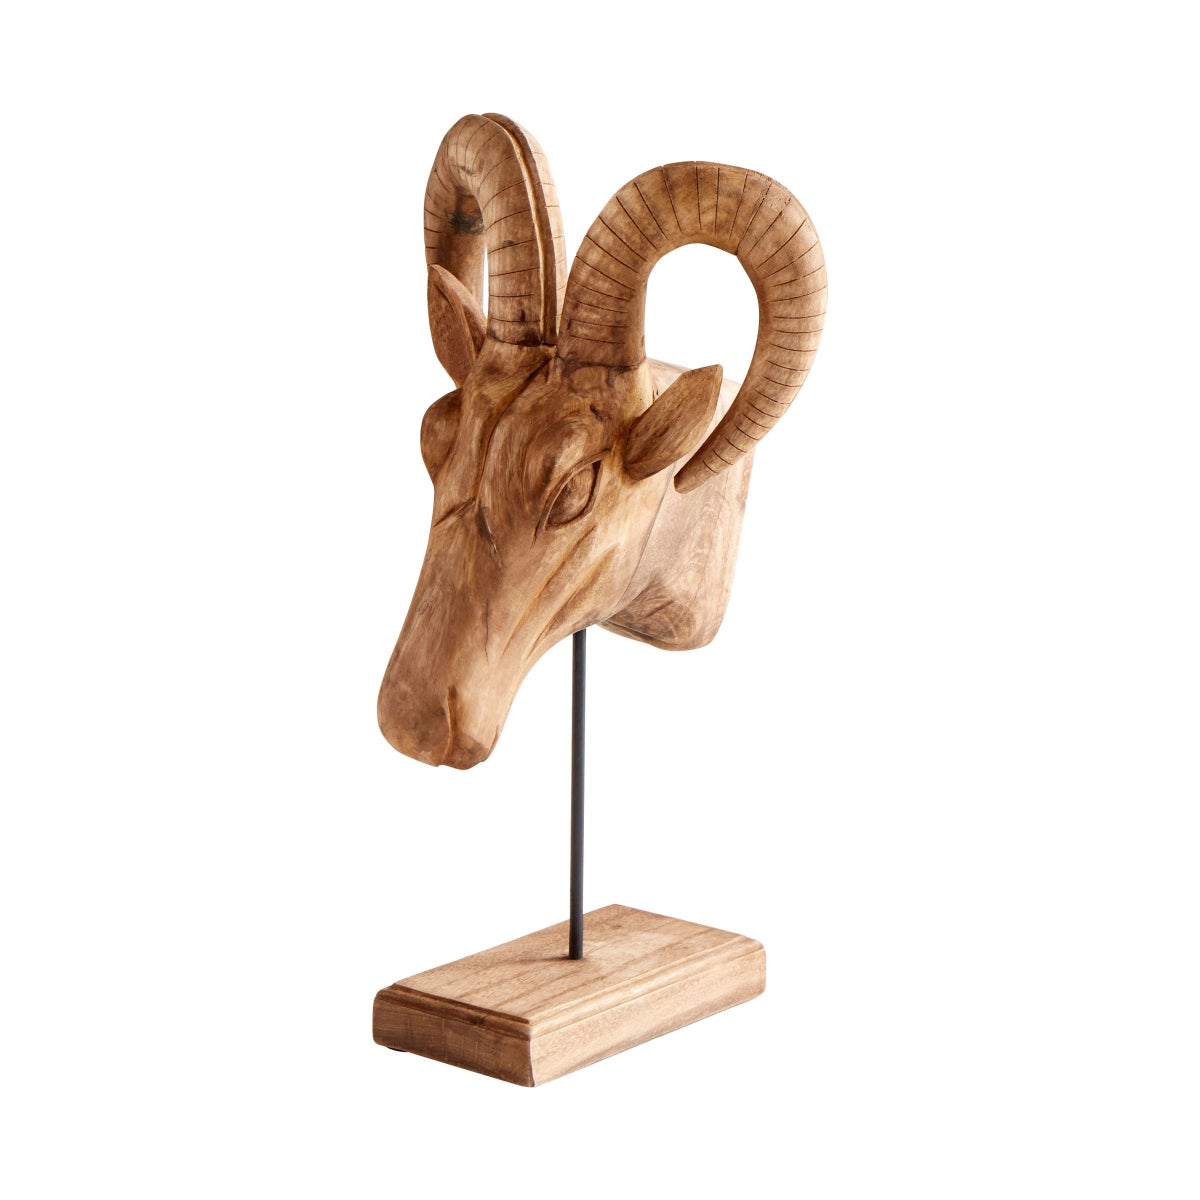 Ibex Sculpture | Natural